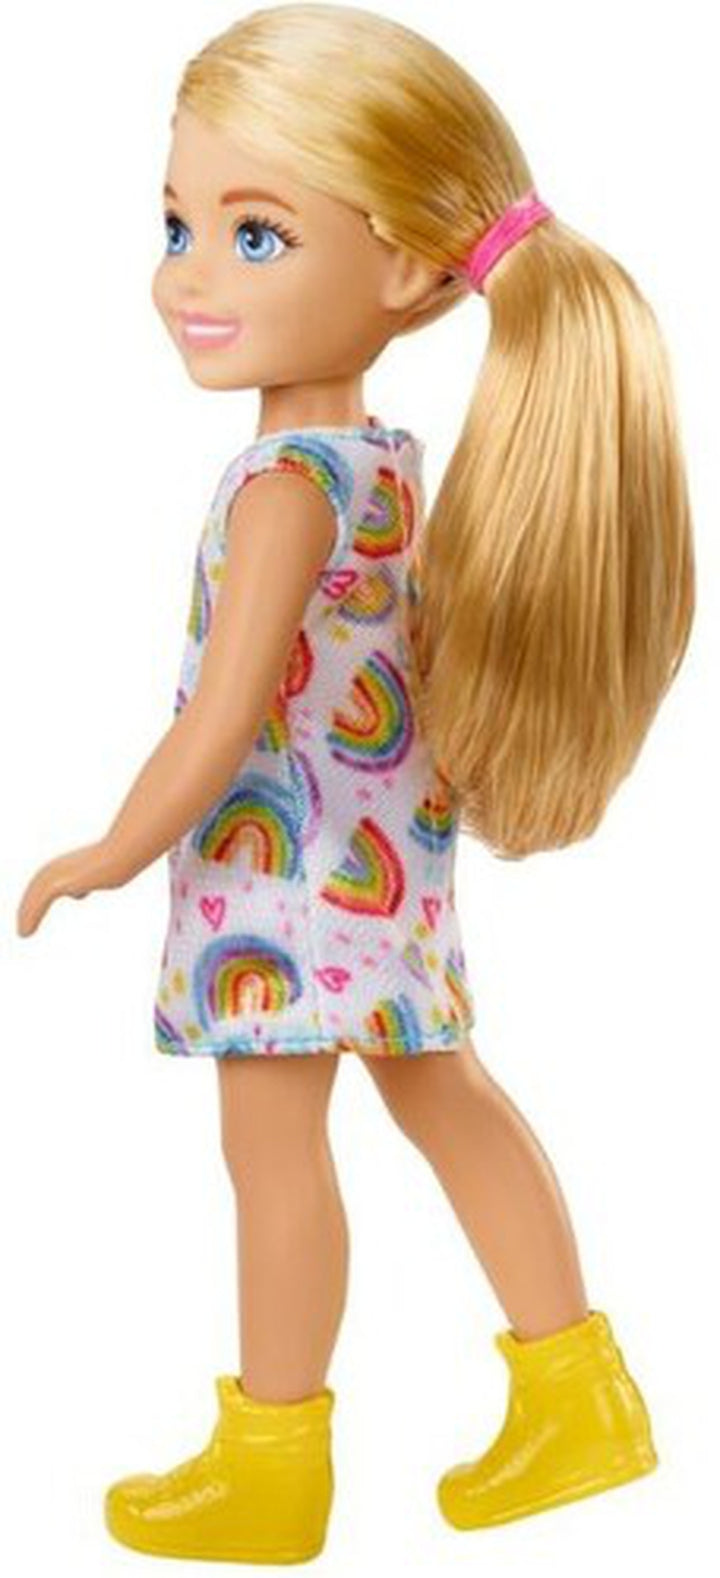 Mattel - Barbie Chelsea Doll with Rainbow Dress, Blonde